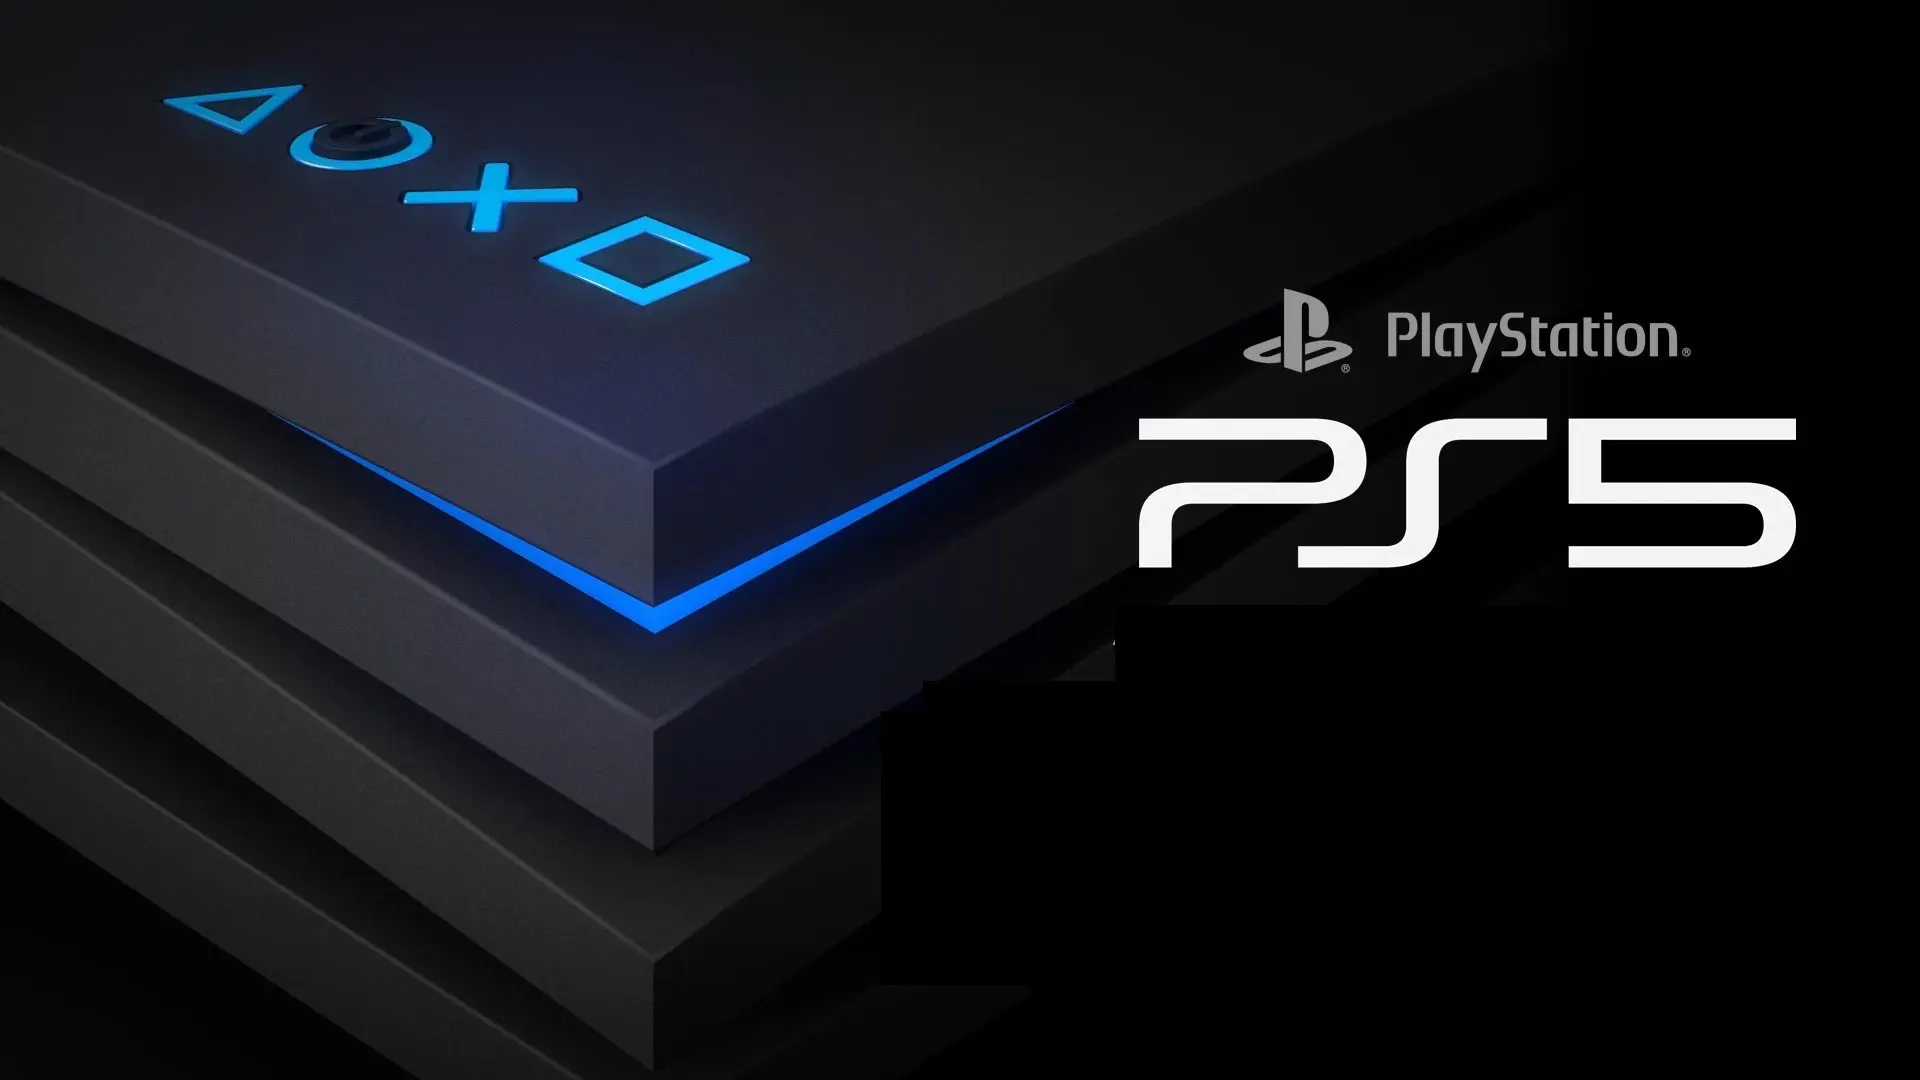 Vaza nova imagem do Dev KIT do PlayStation 5 [rumor]